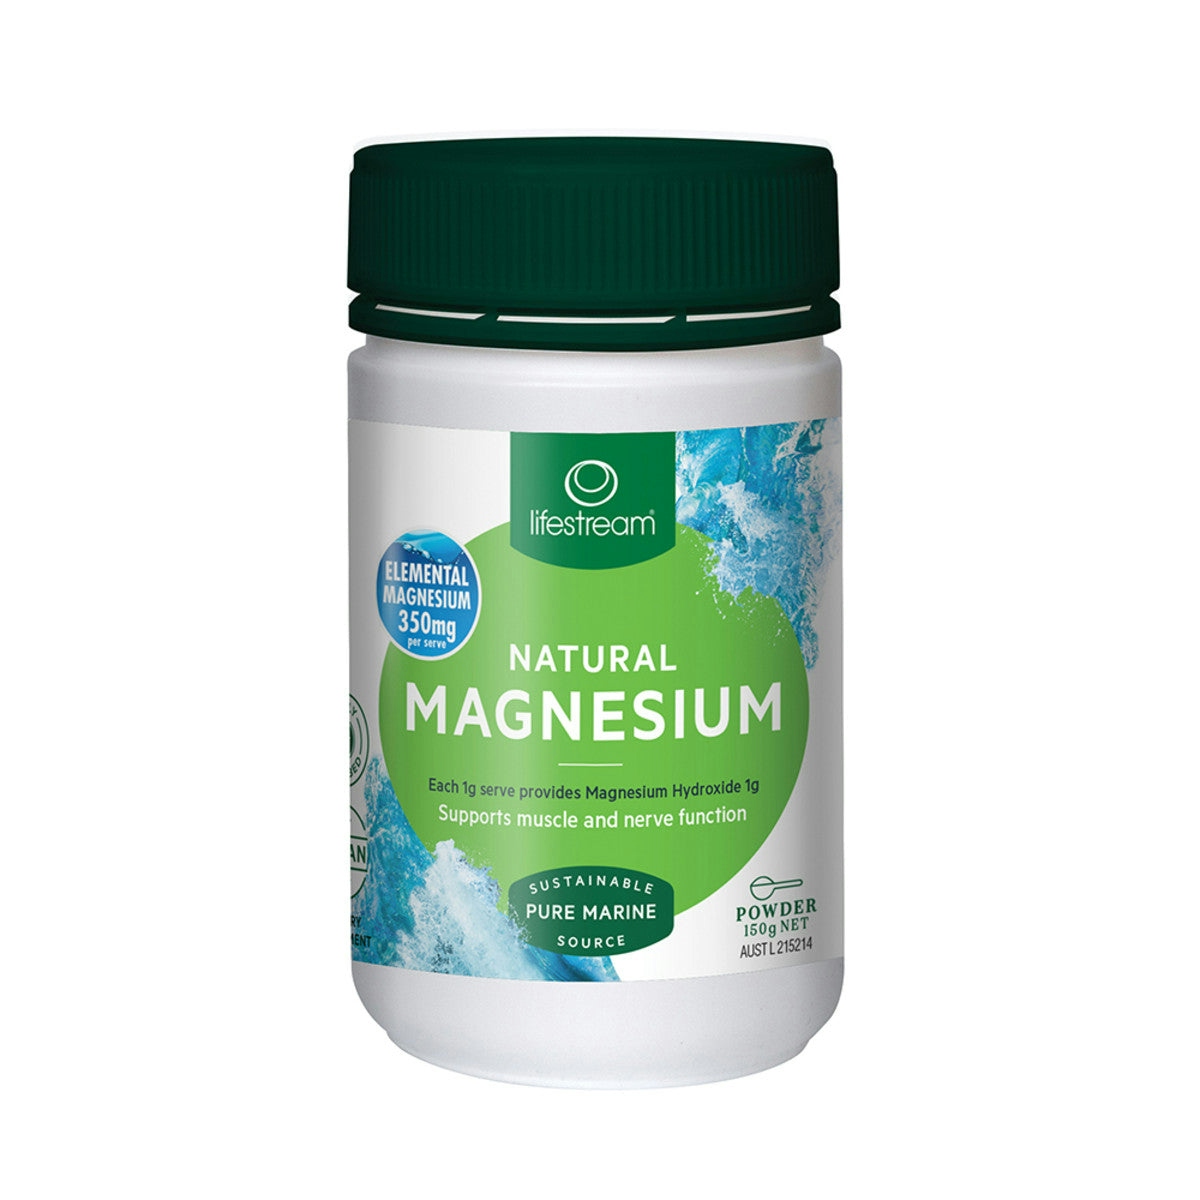 image of LifeStream Natural Magnesium (Pure Marine Source) 150g Powder on white background 